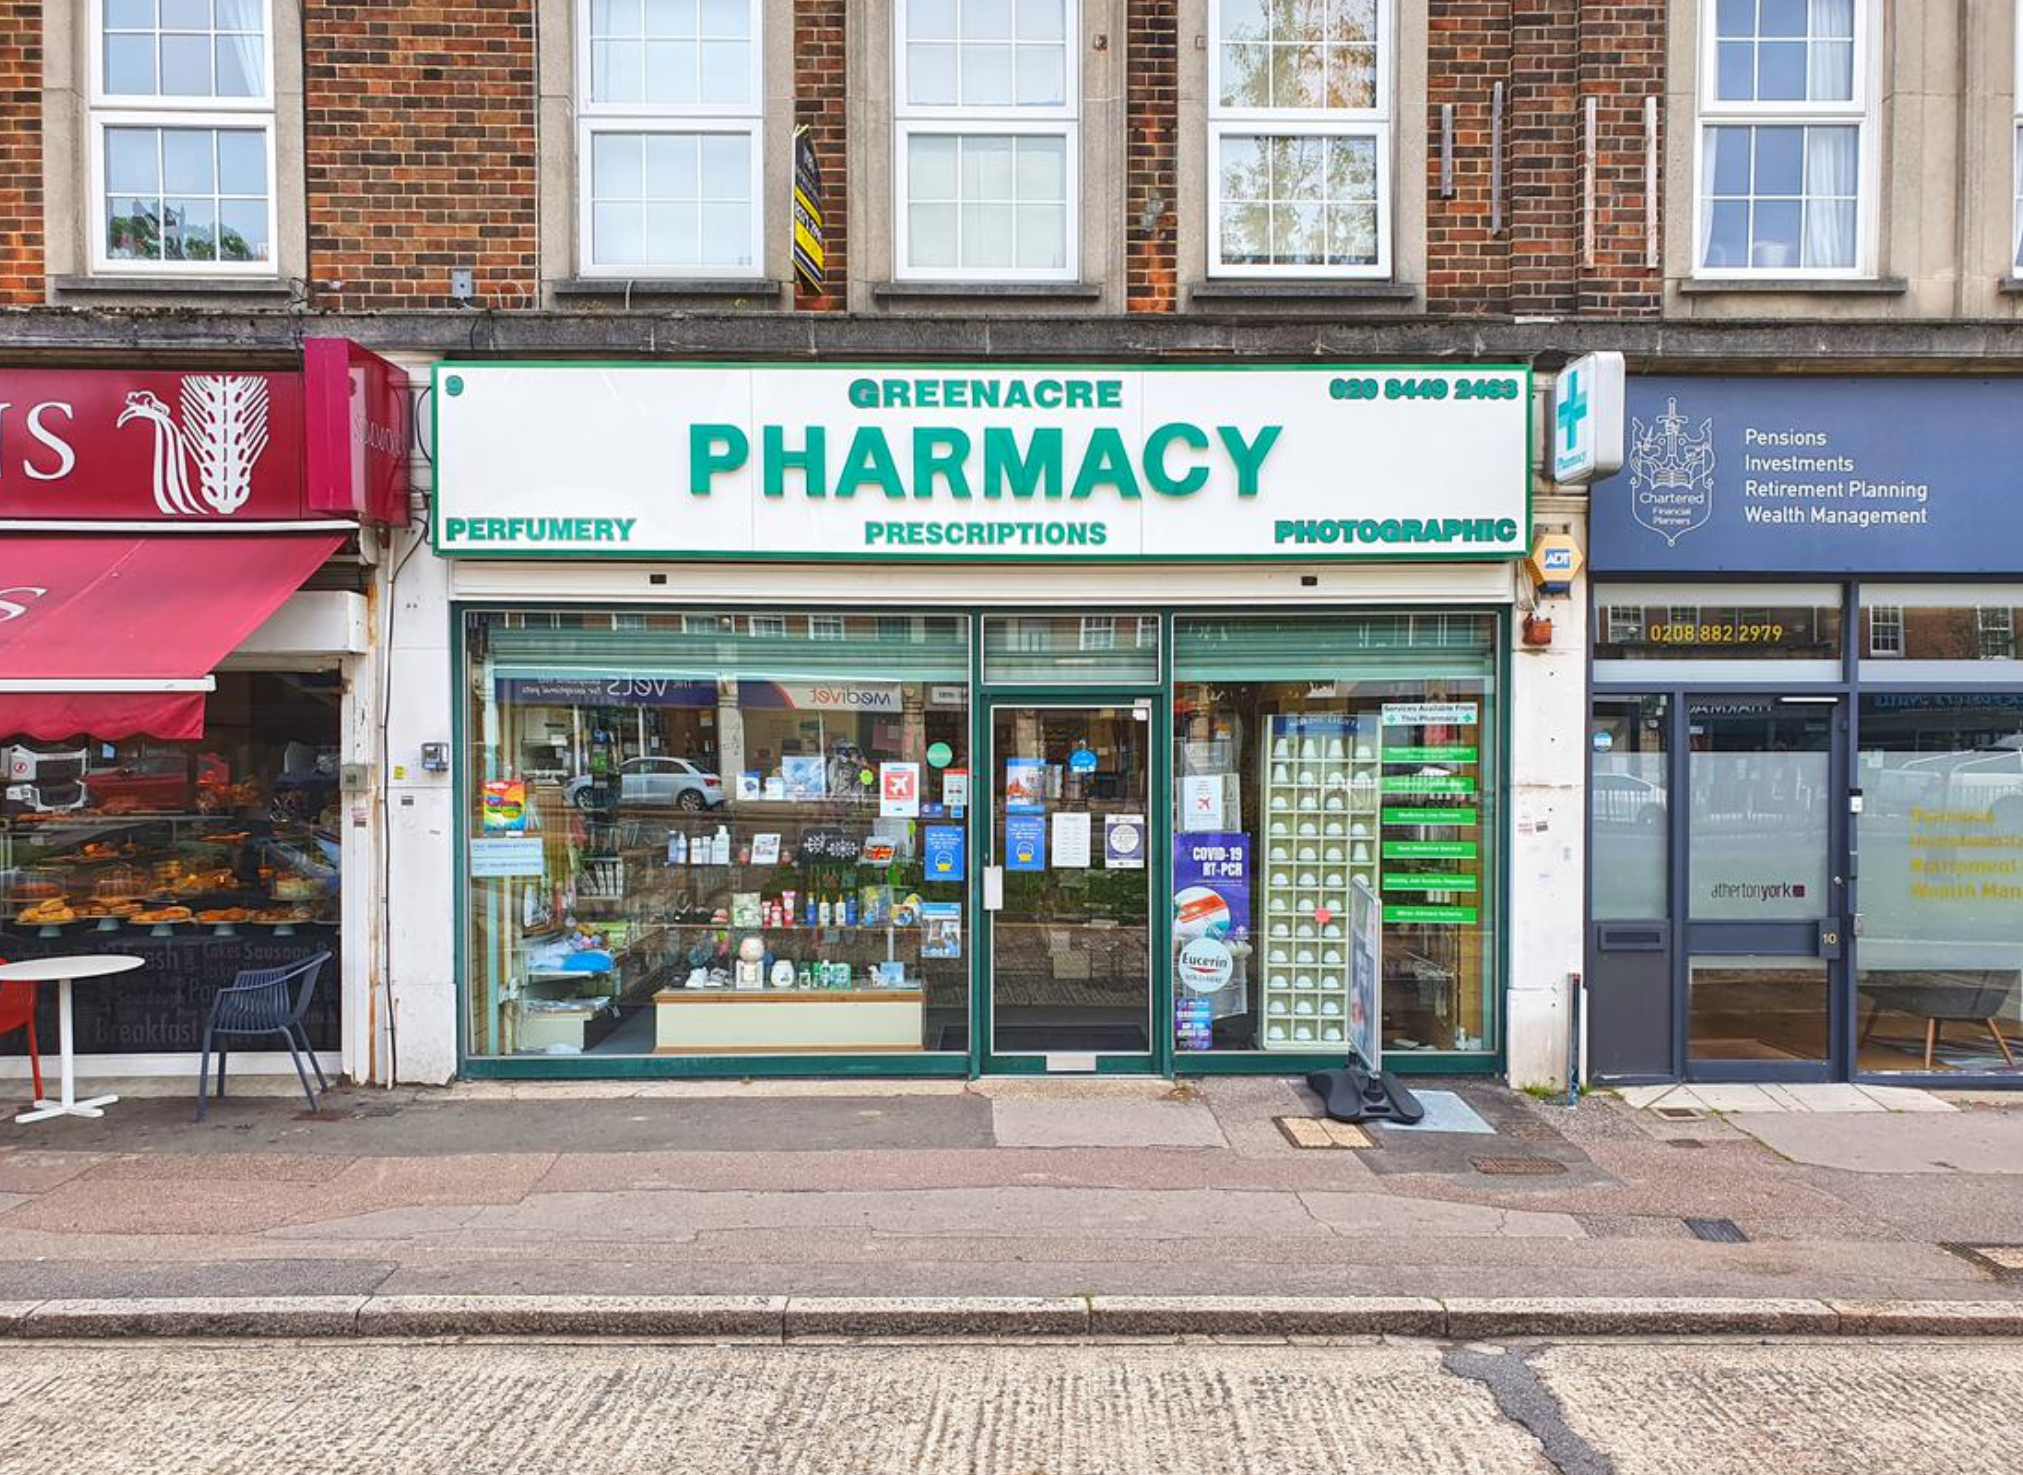 Greenacre Pharmacy in north London